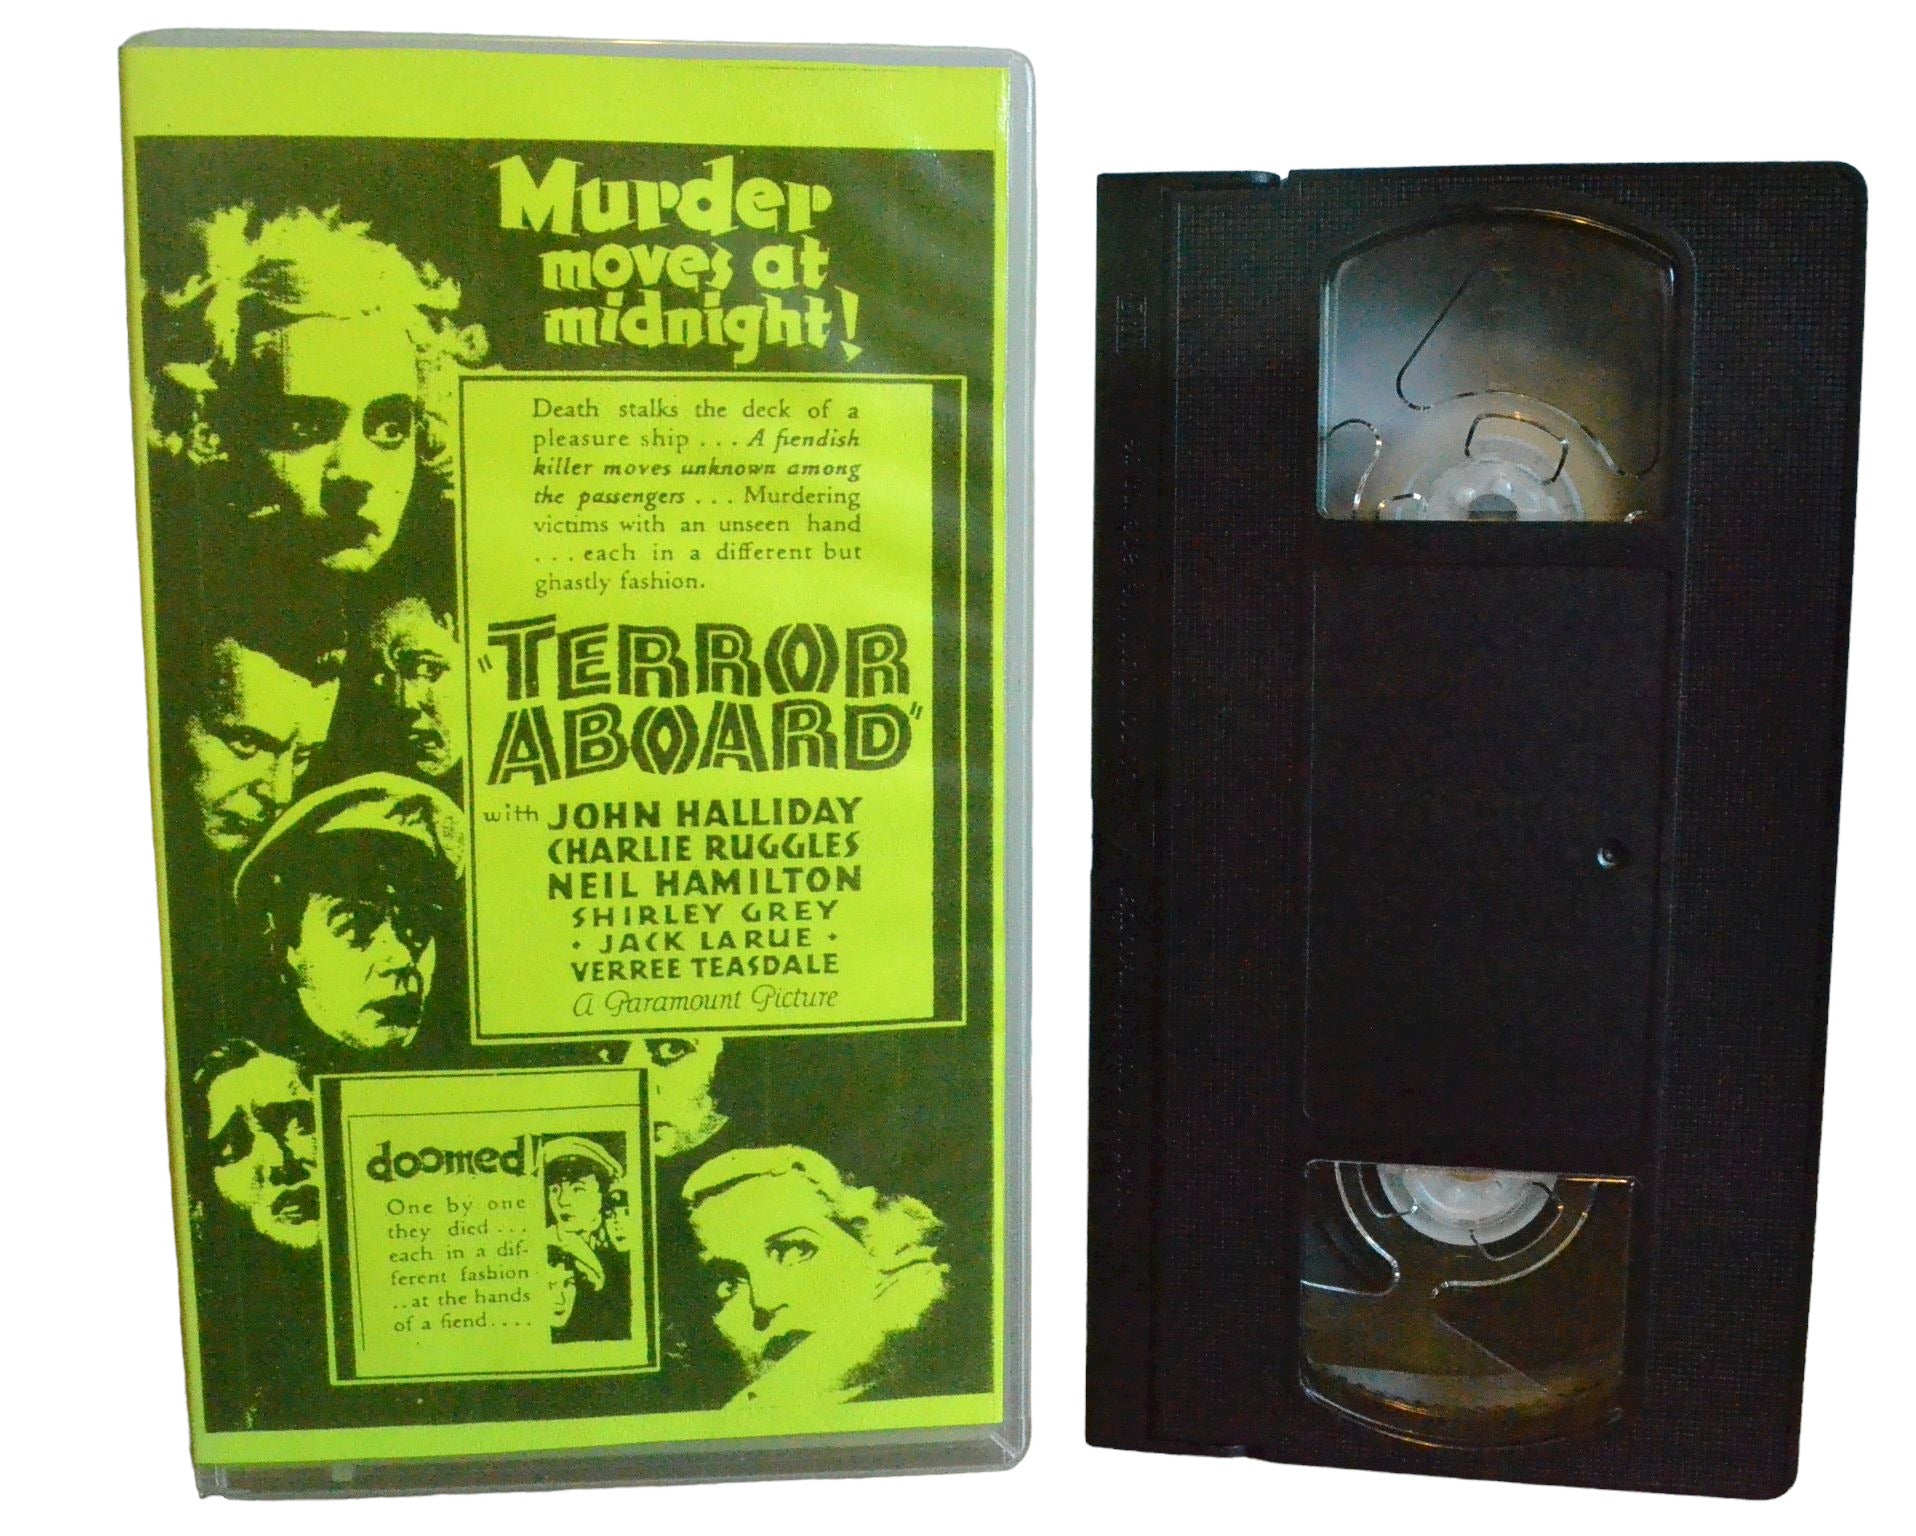 Terror Aboard - John Halliday - The Fang - Horror - Pal - VHS-